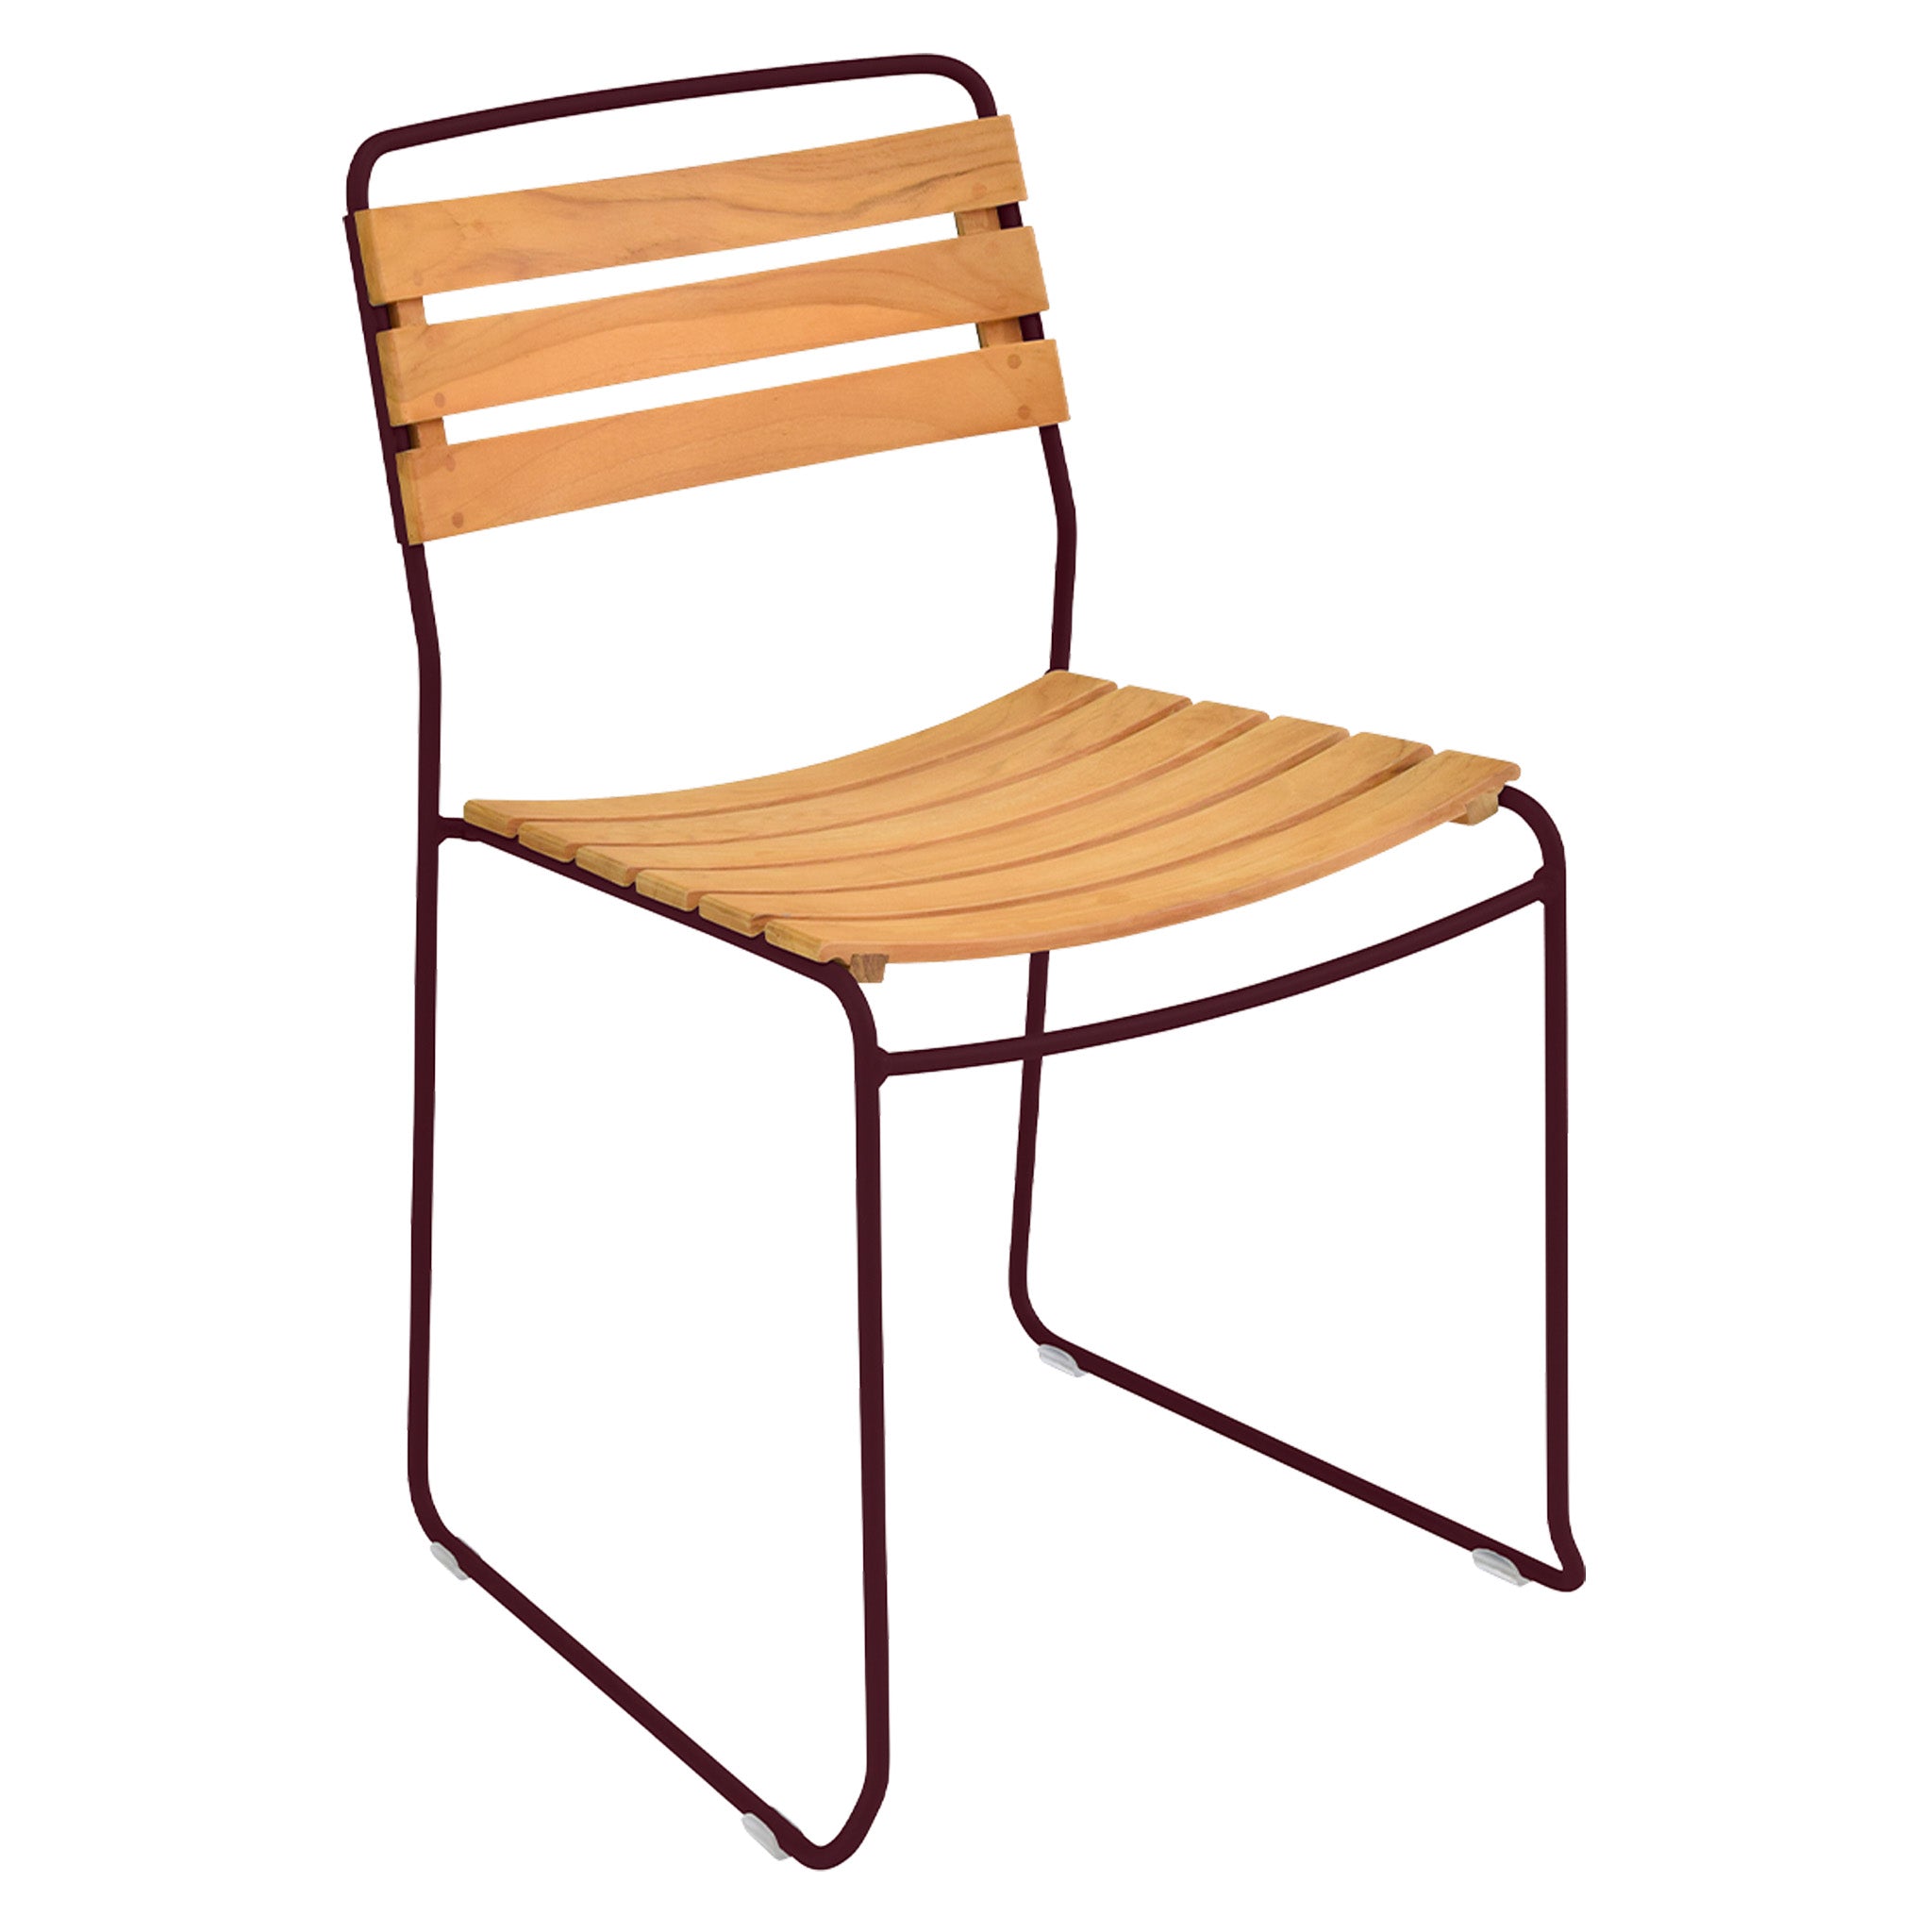 Surprising Teak Chair by Fermob